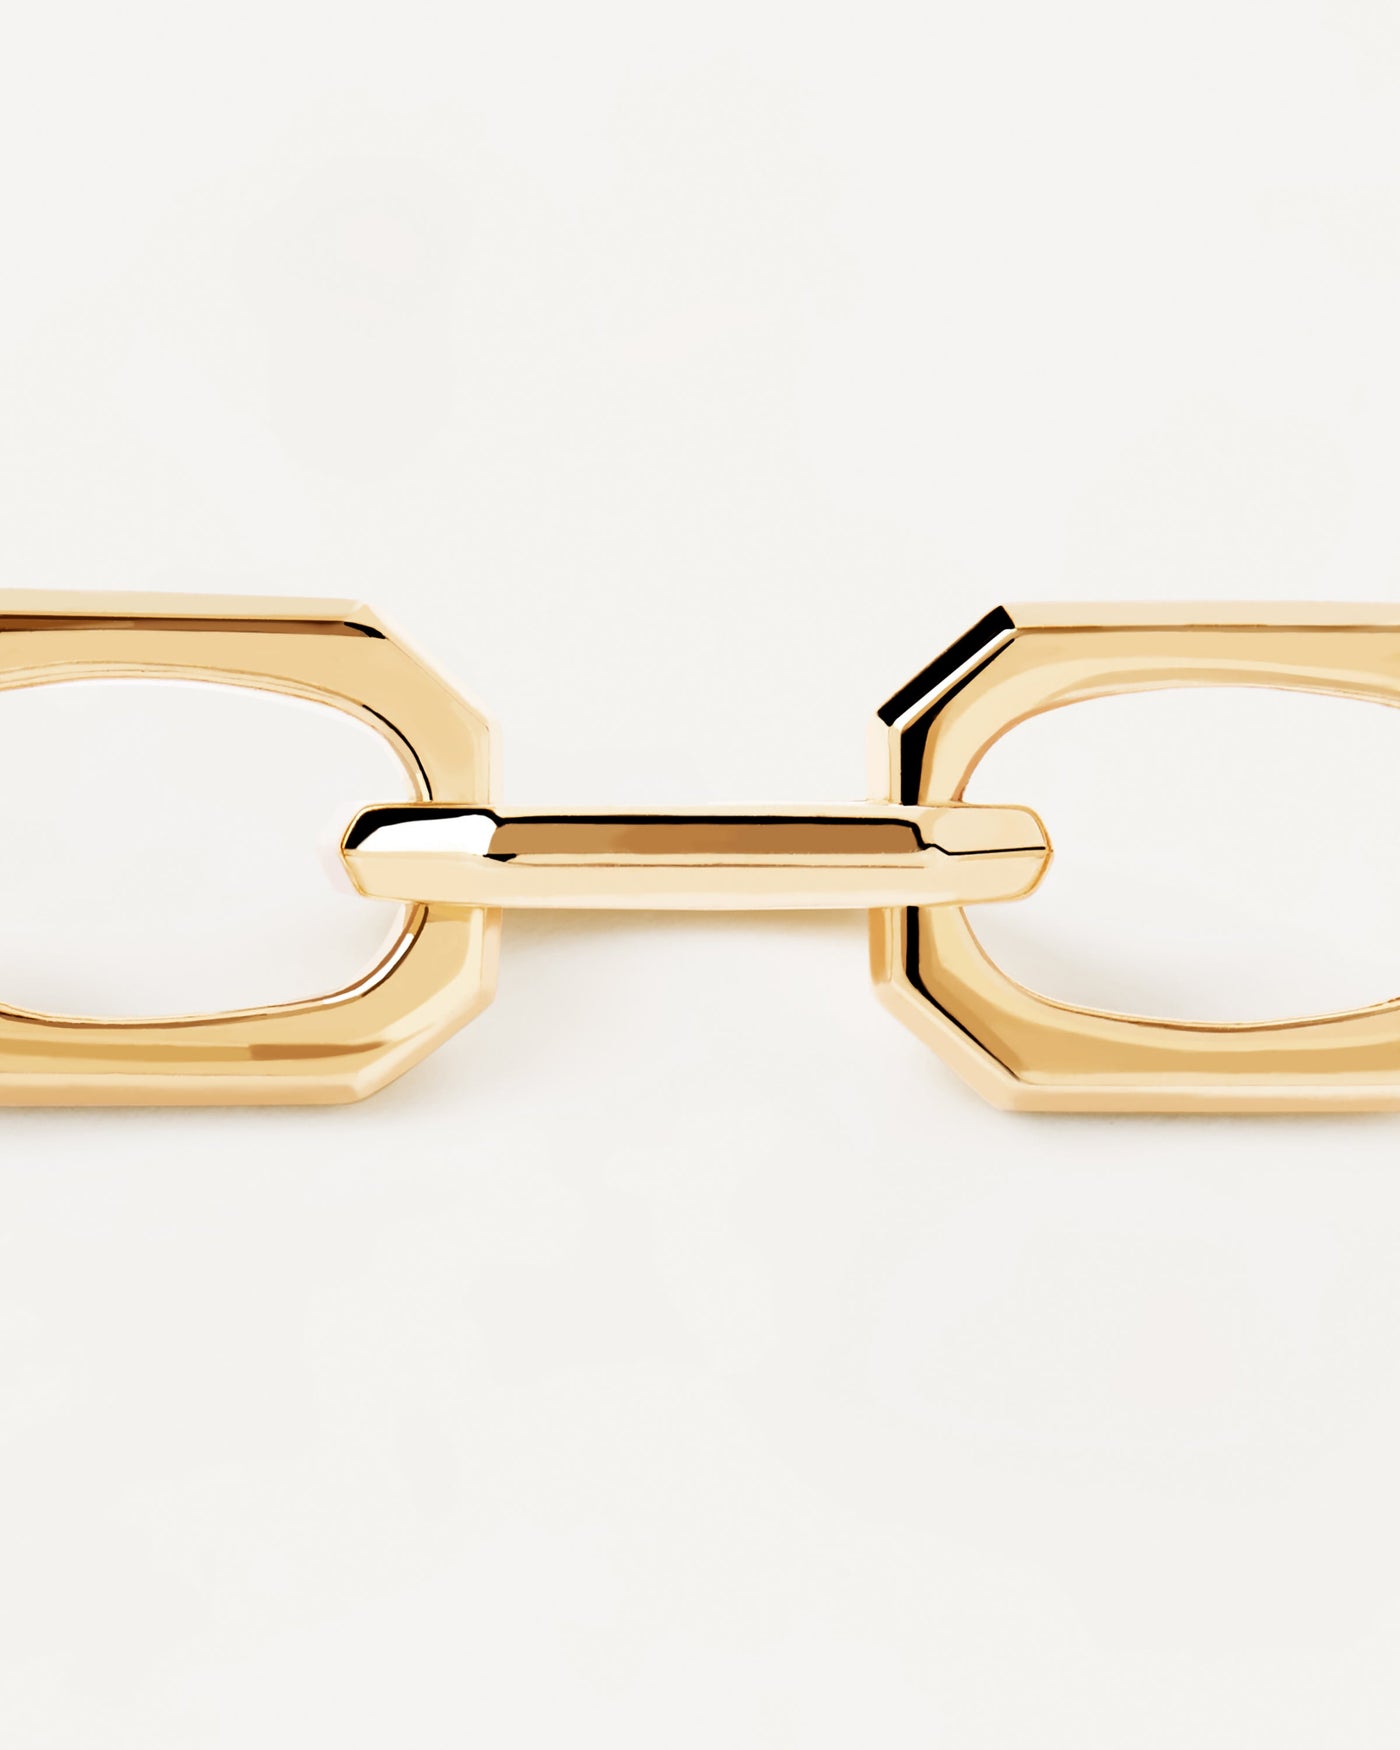 Small Signature Chain Bracelet - 
  
    Brass / 18K Gold plating
  
